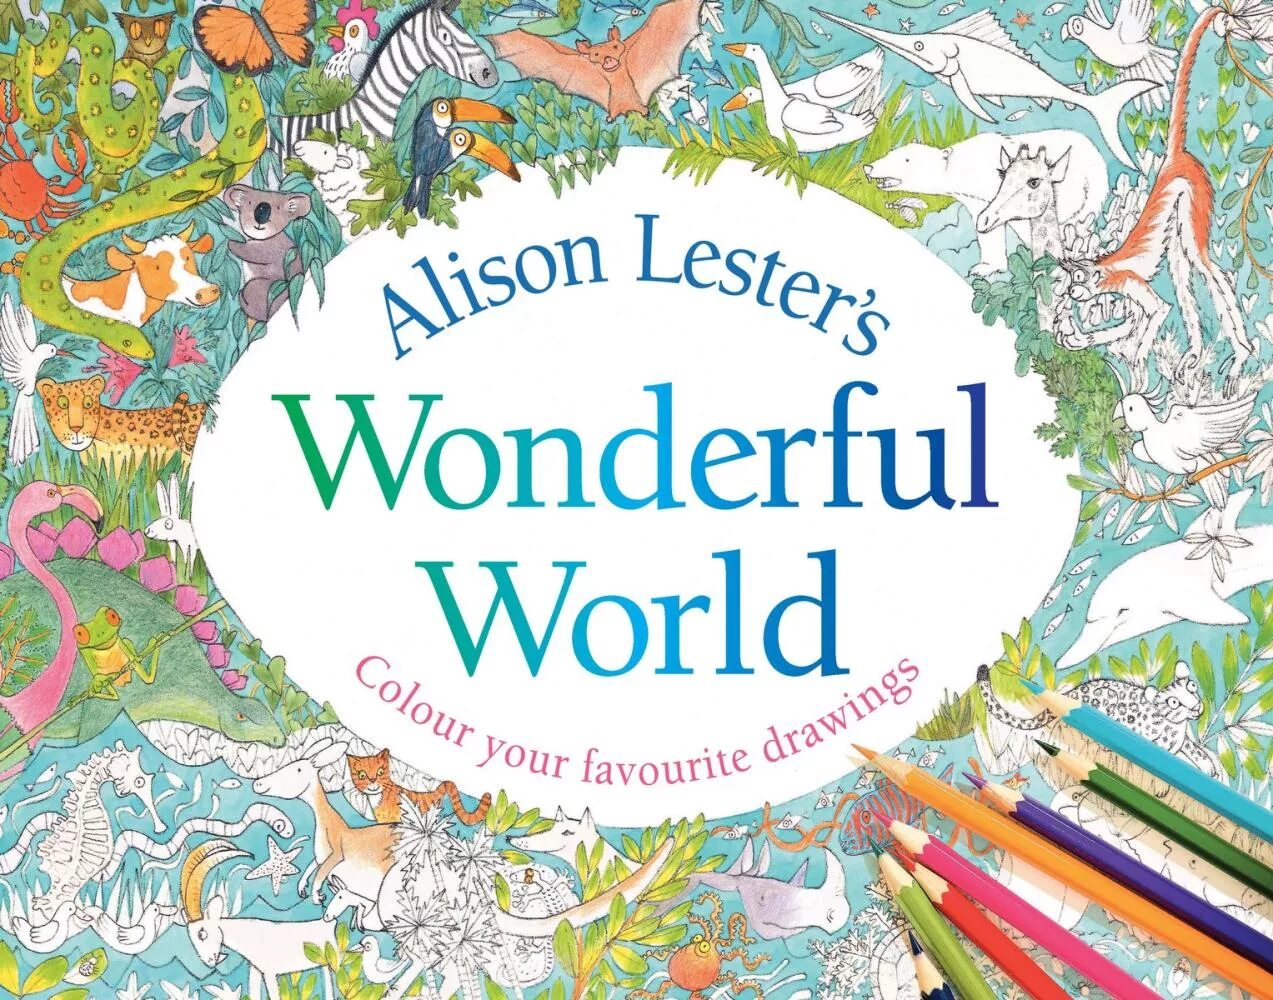 Were wonderful world. Wonderful World учебник. Элисон Лестер иллюстрации. Wonderful World book. Our wonderful World.